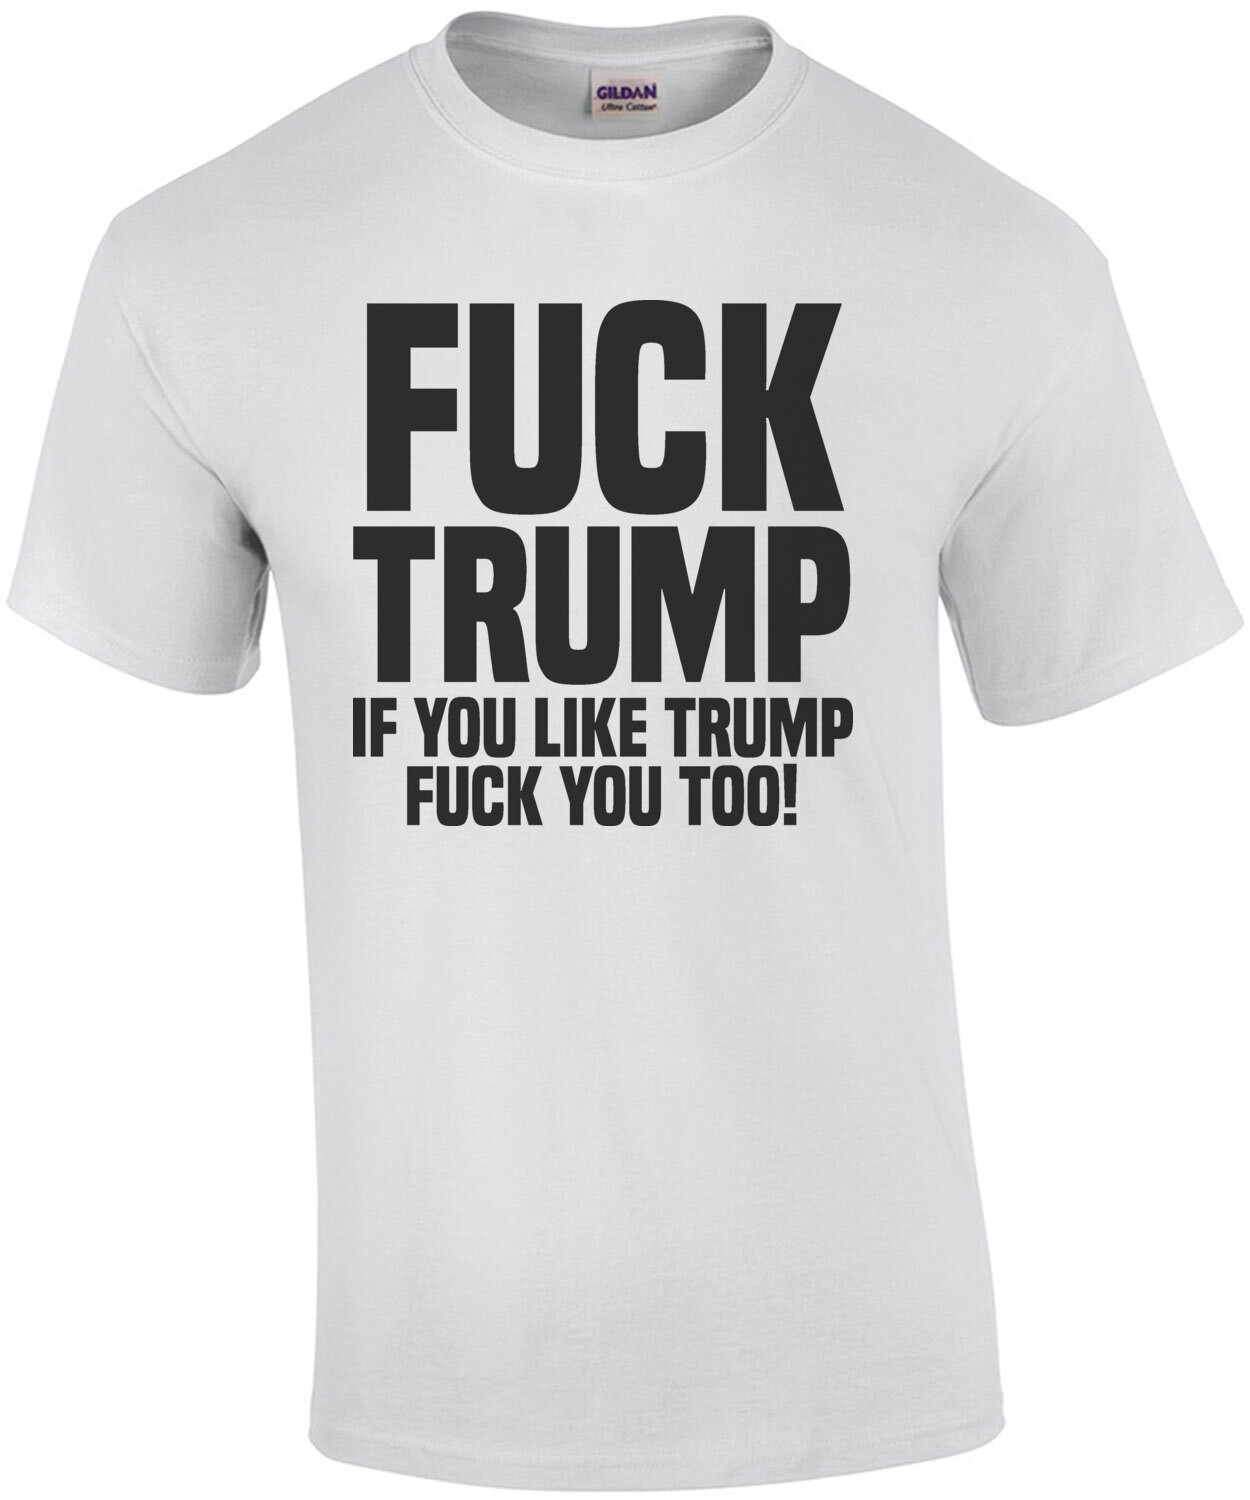 Fuck Trump - If you like trump fuck you too - political anti trump election 2020 t-shirt